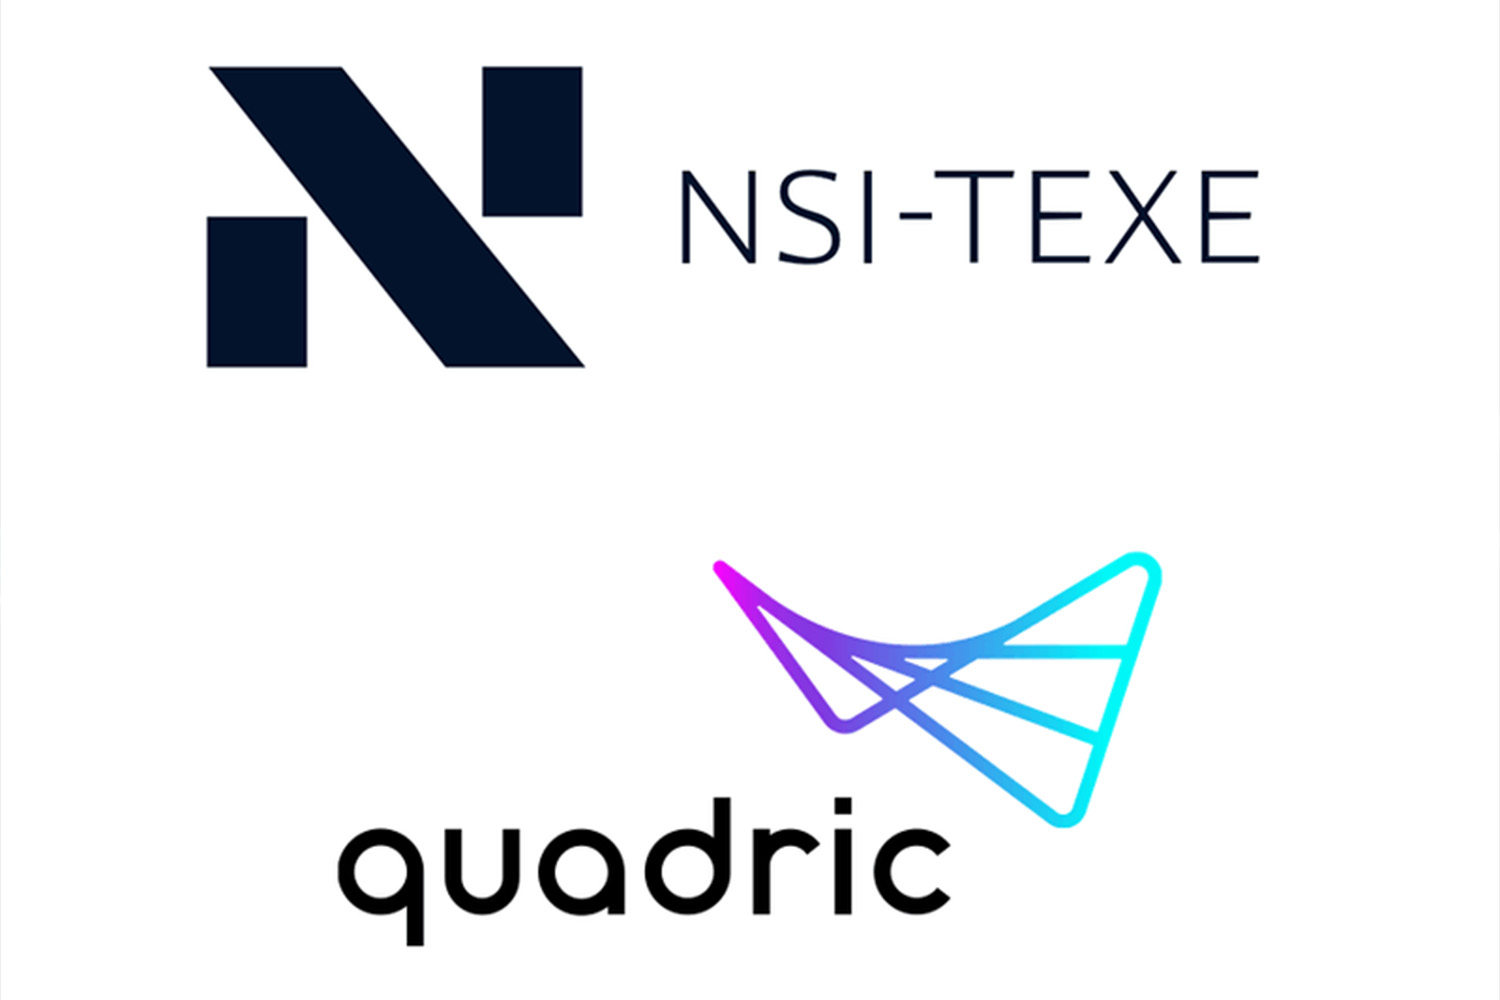 NSI-TEXE and Quadric Logos